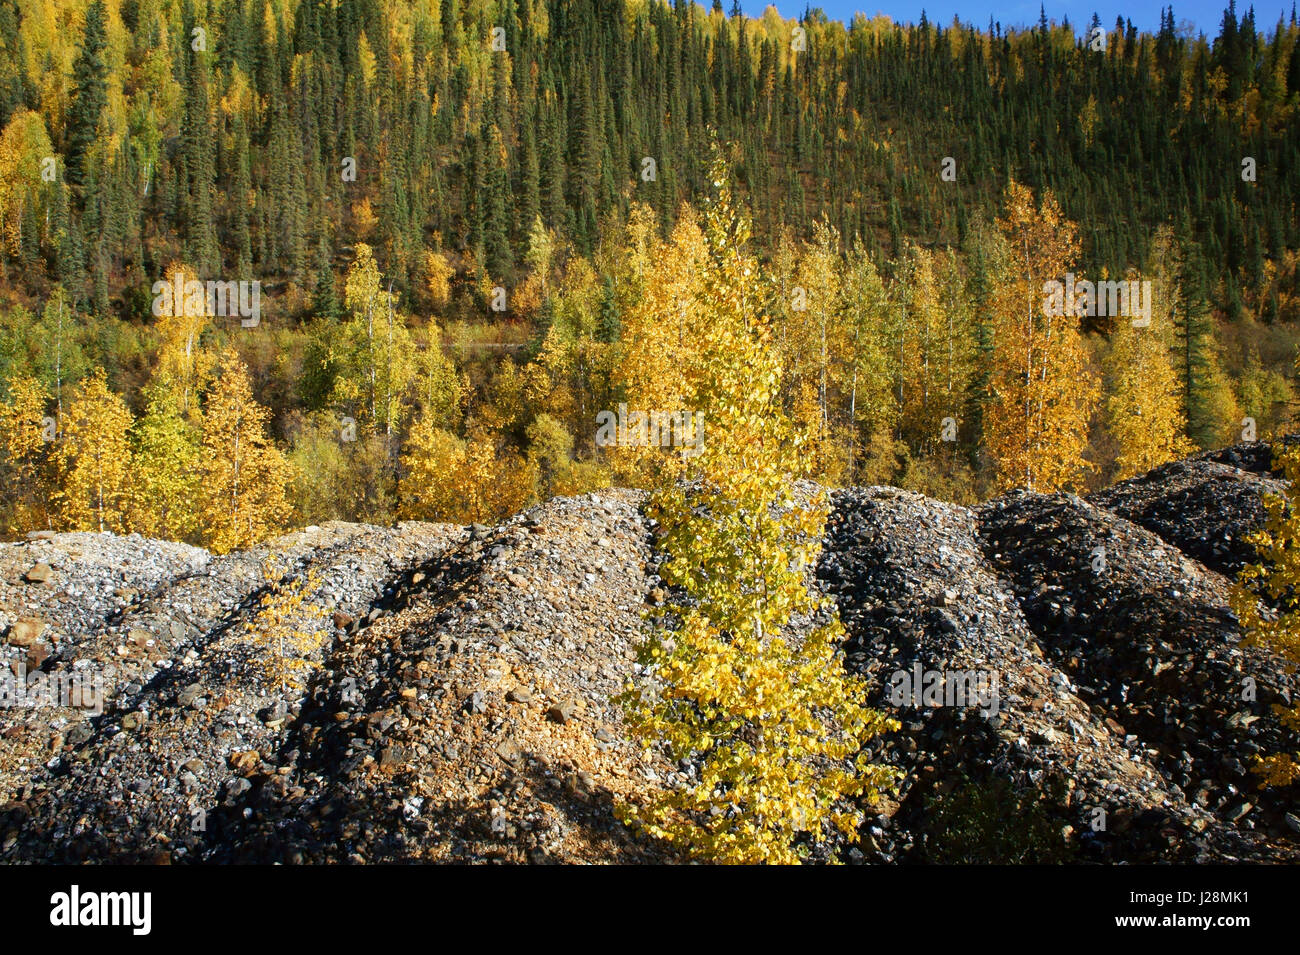 Haufen von Gold Dredgingand borealen Wald, Herbst, Bonanza Creek Kies. Klondike Gold Rush, Dawson City, Yukon Terr. Kanada Stockfoto